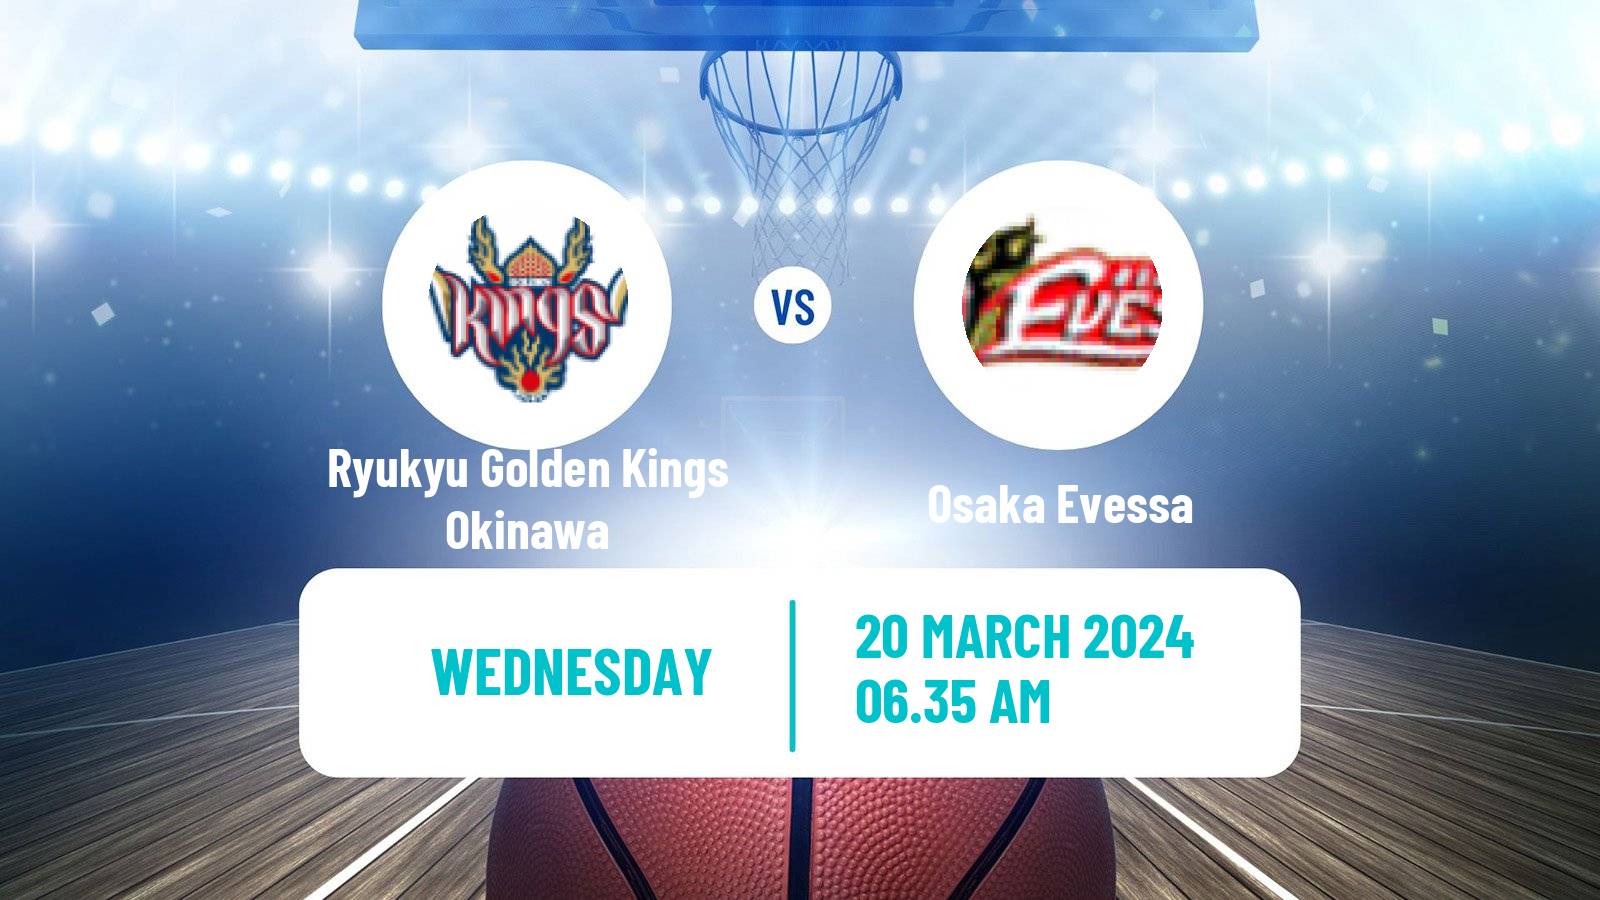 Basketball BJ League Ryukyu Golden Kings Okinawa - Osaka Evessa